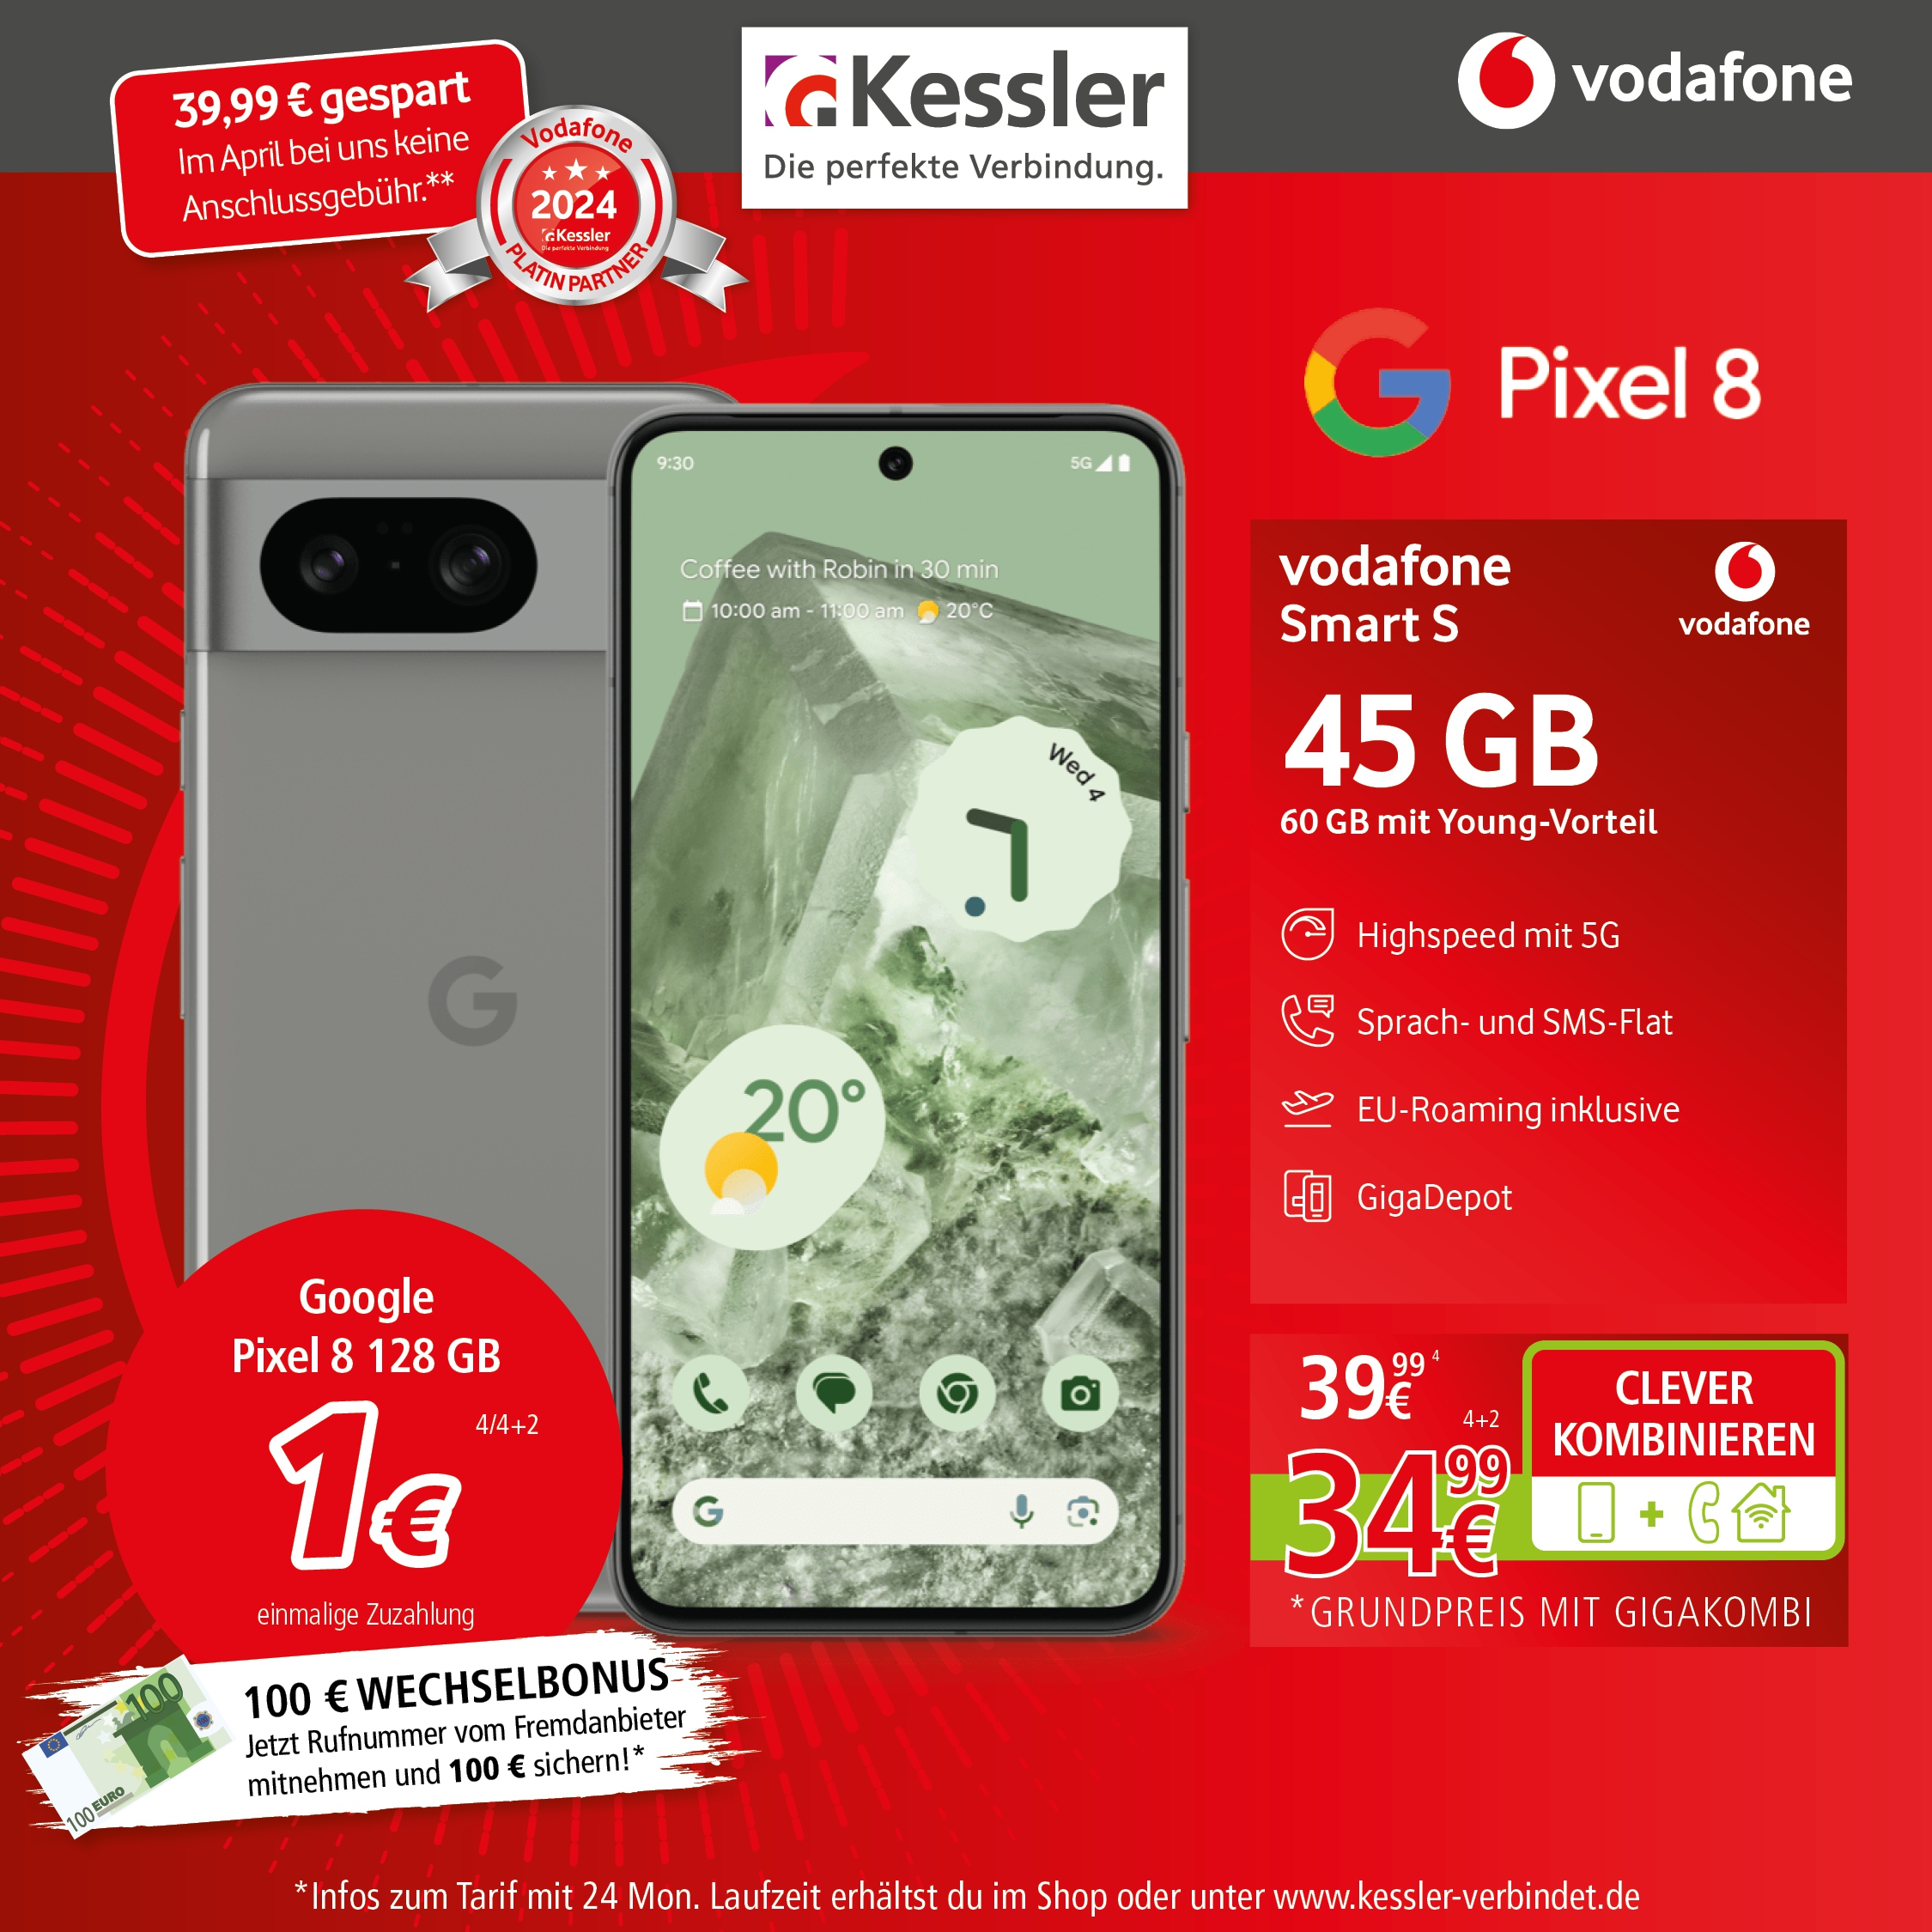 Vodafone Smart S mit Google Pixel 8 128GB